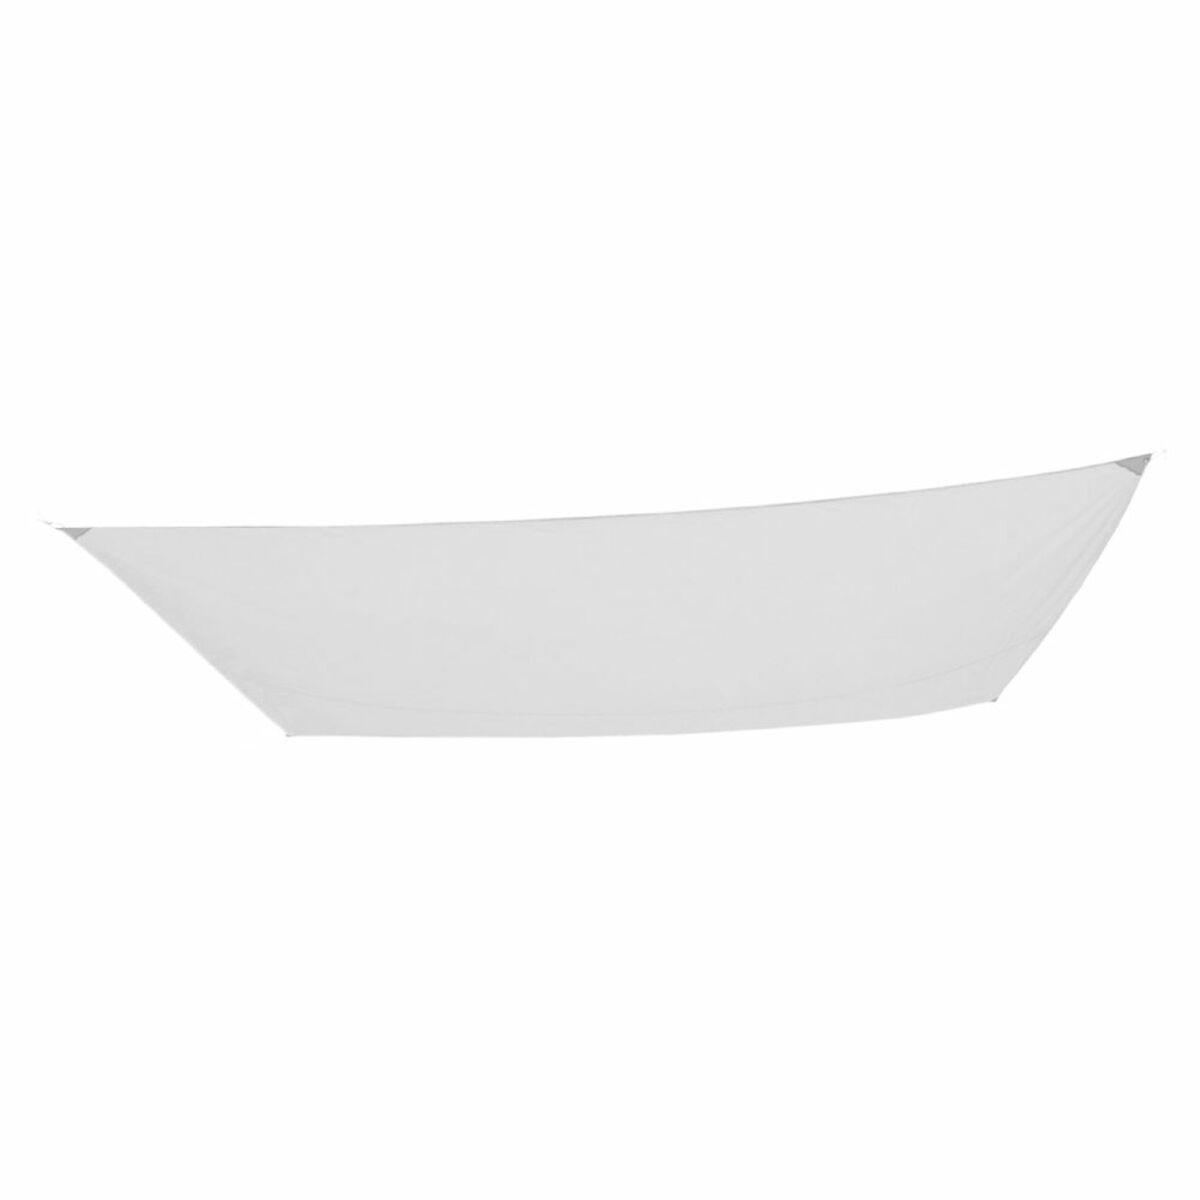 Velas de sombra Aktive Triangular Blanco 300 x 0,5 x 400 cm (4 Unidades)